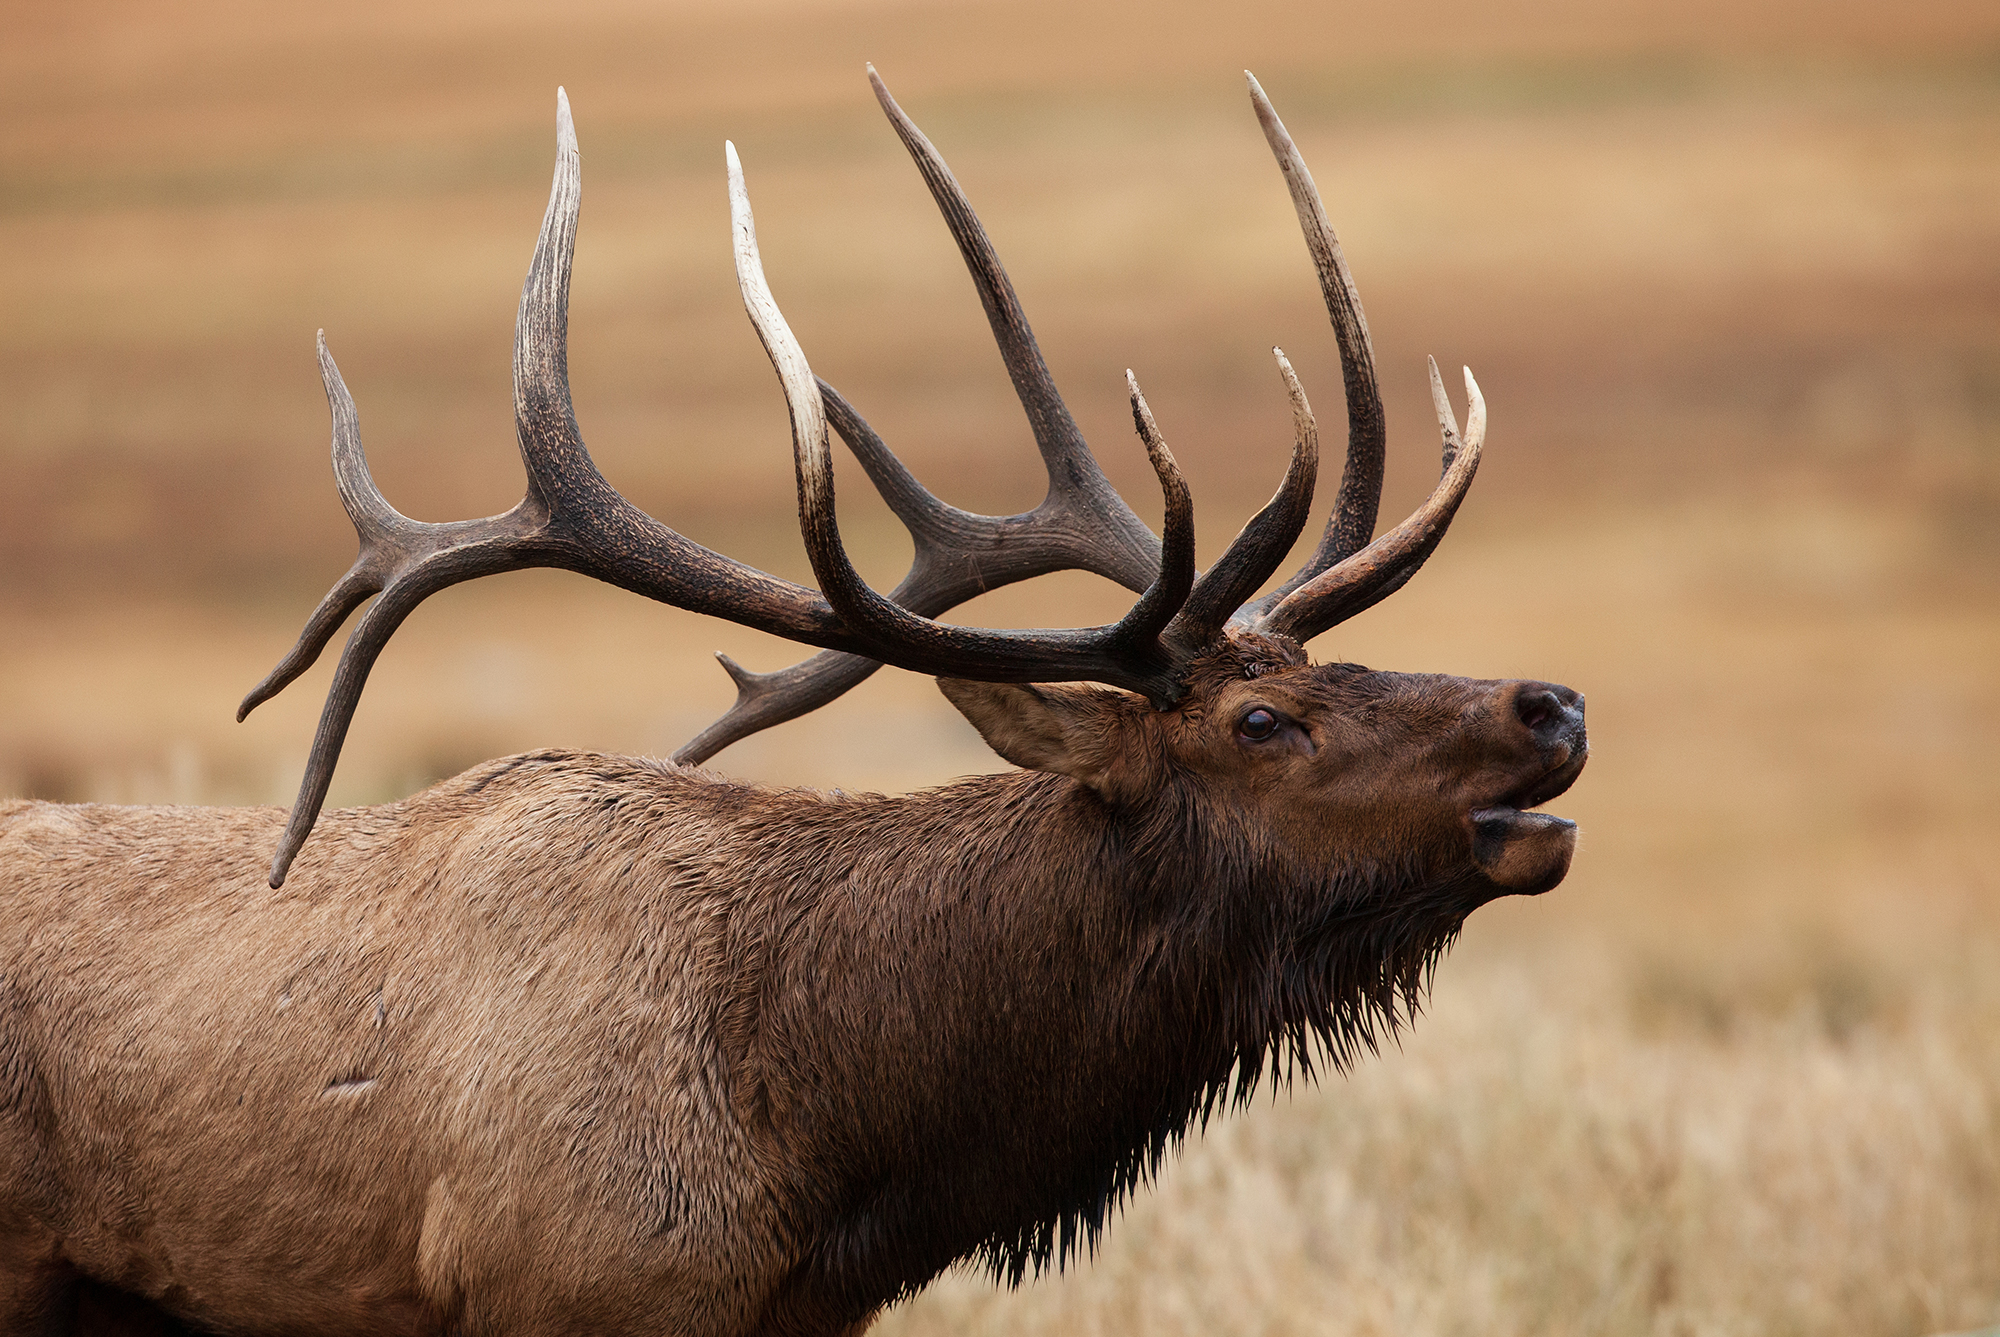 Bull elk bugling on a hunt.